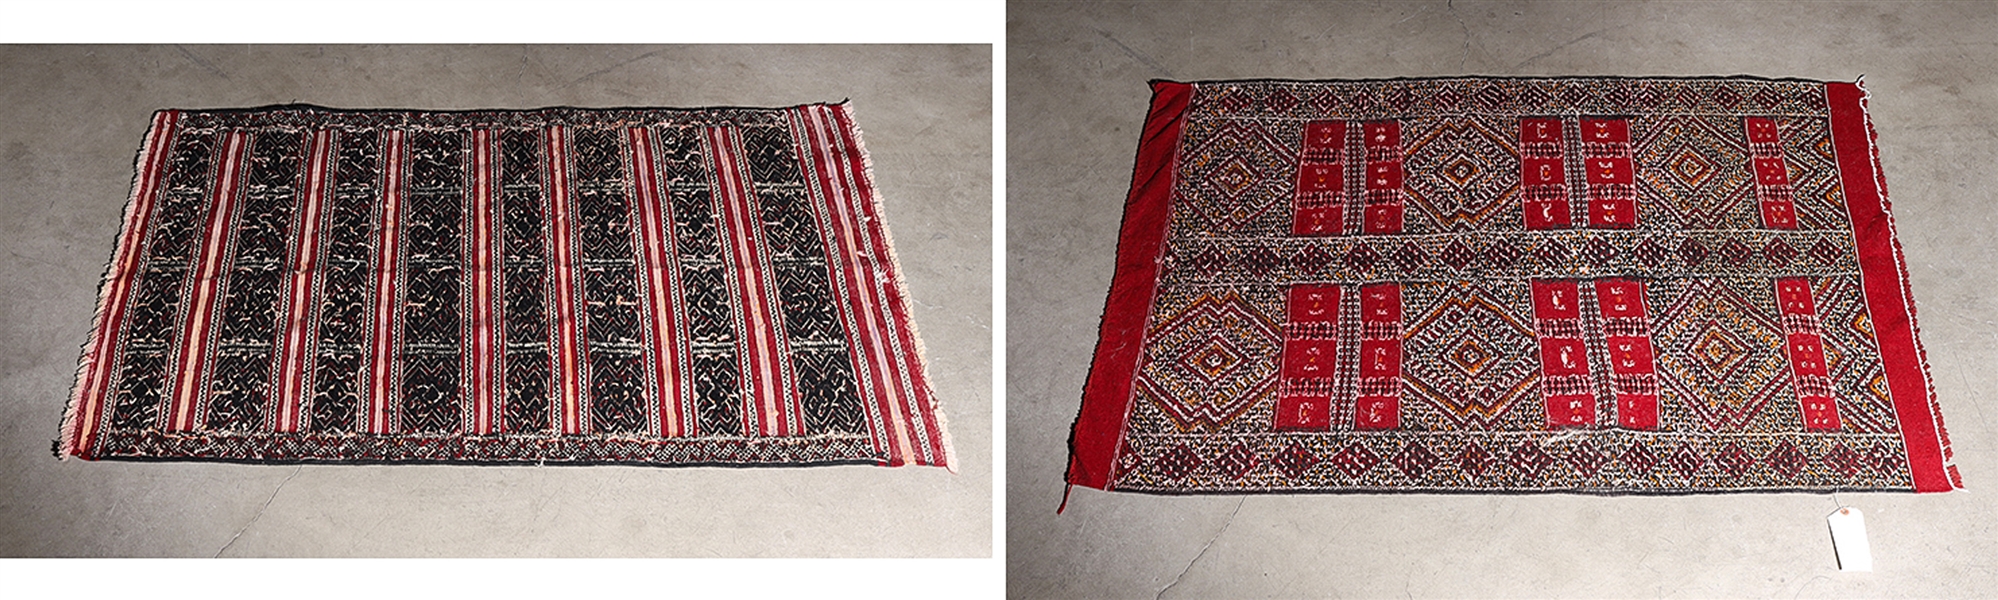 Lot of two Afghan Kilim rugs both